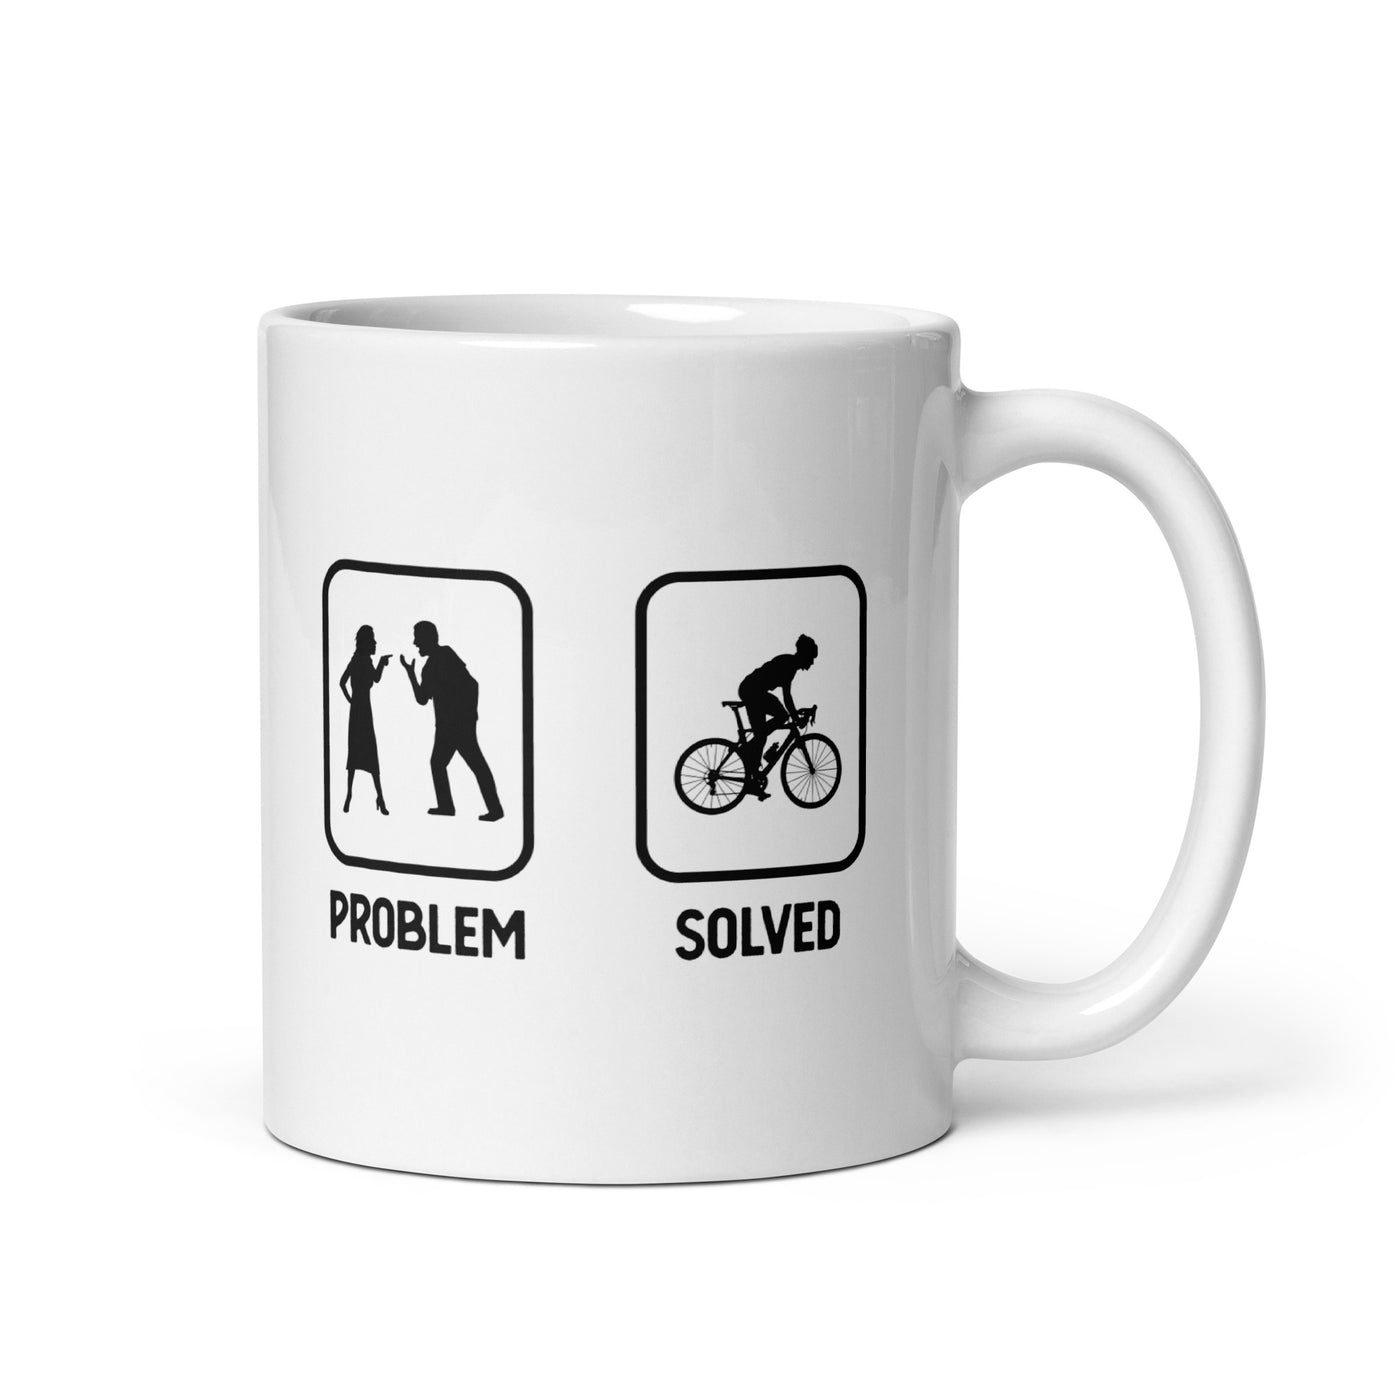 Problem Solved - Guy Cycling - Tasse fahrrad